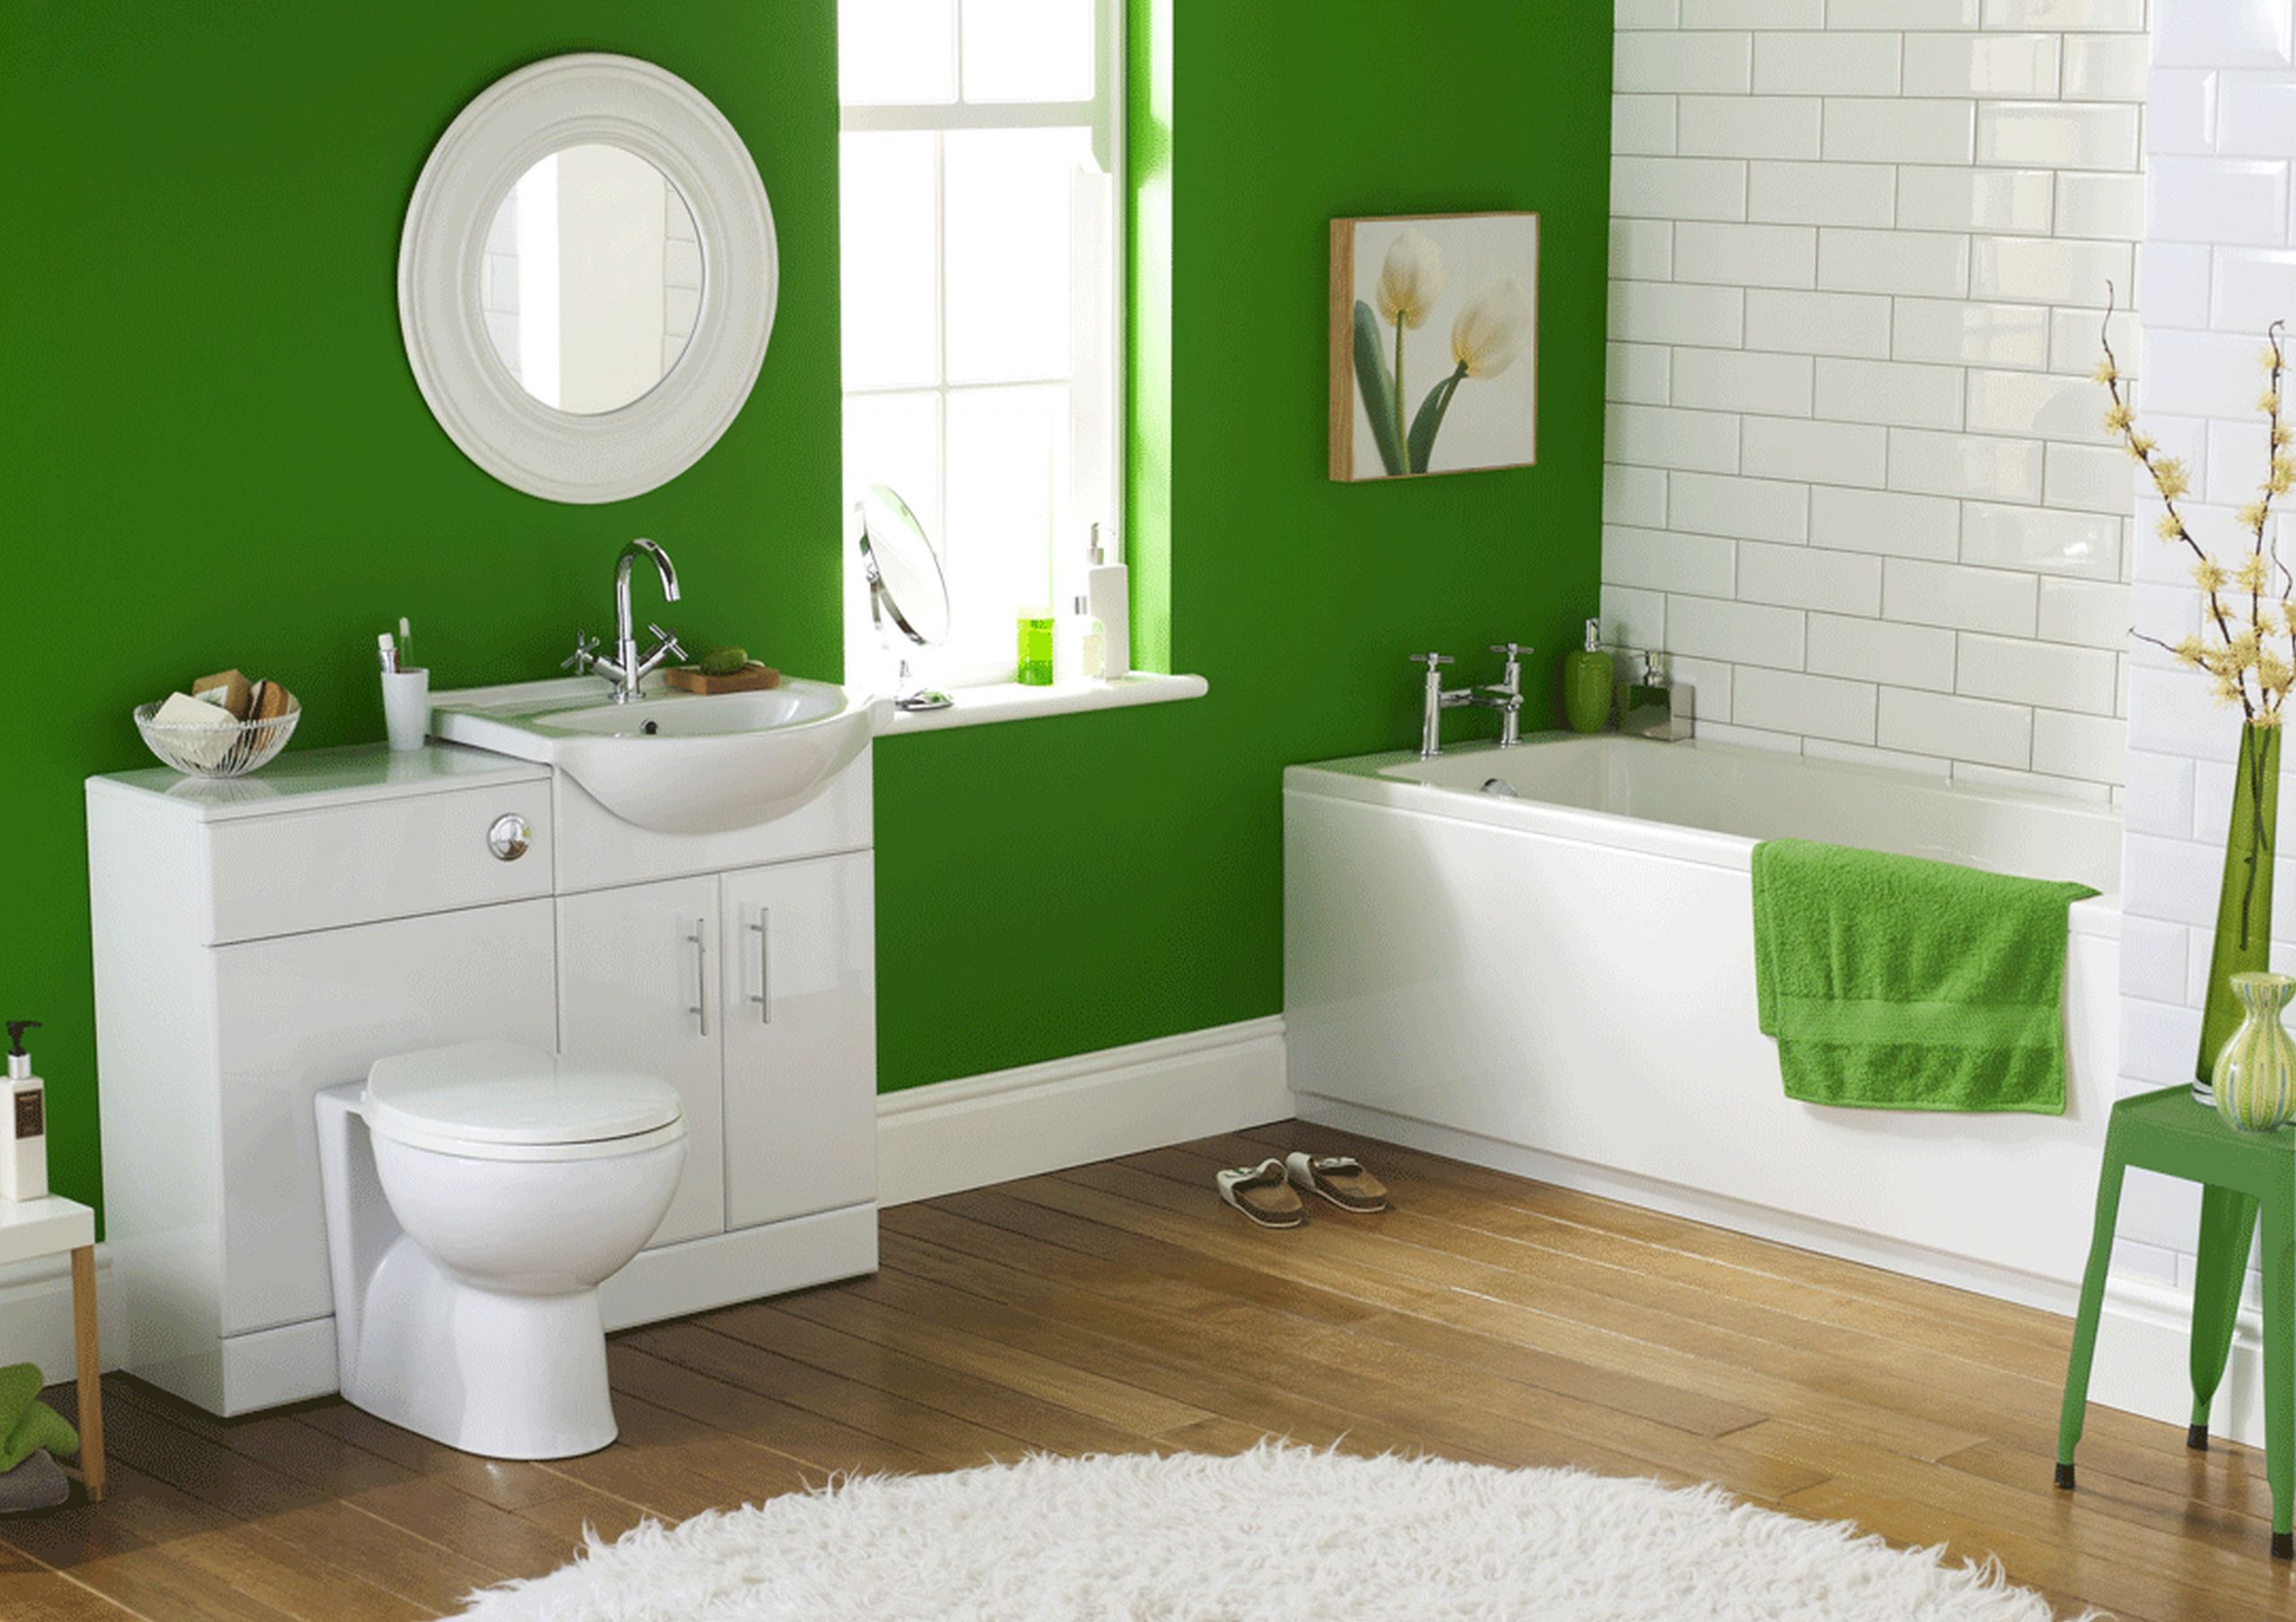 Bathroom Wall Designs
 Bathroom Décor Ideas From Tub To Colors MidCityEast